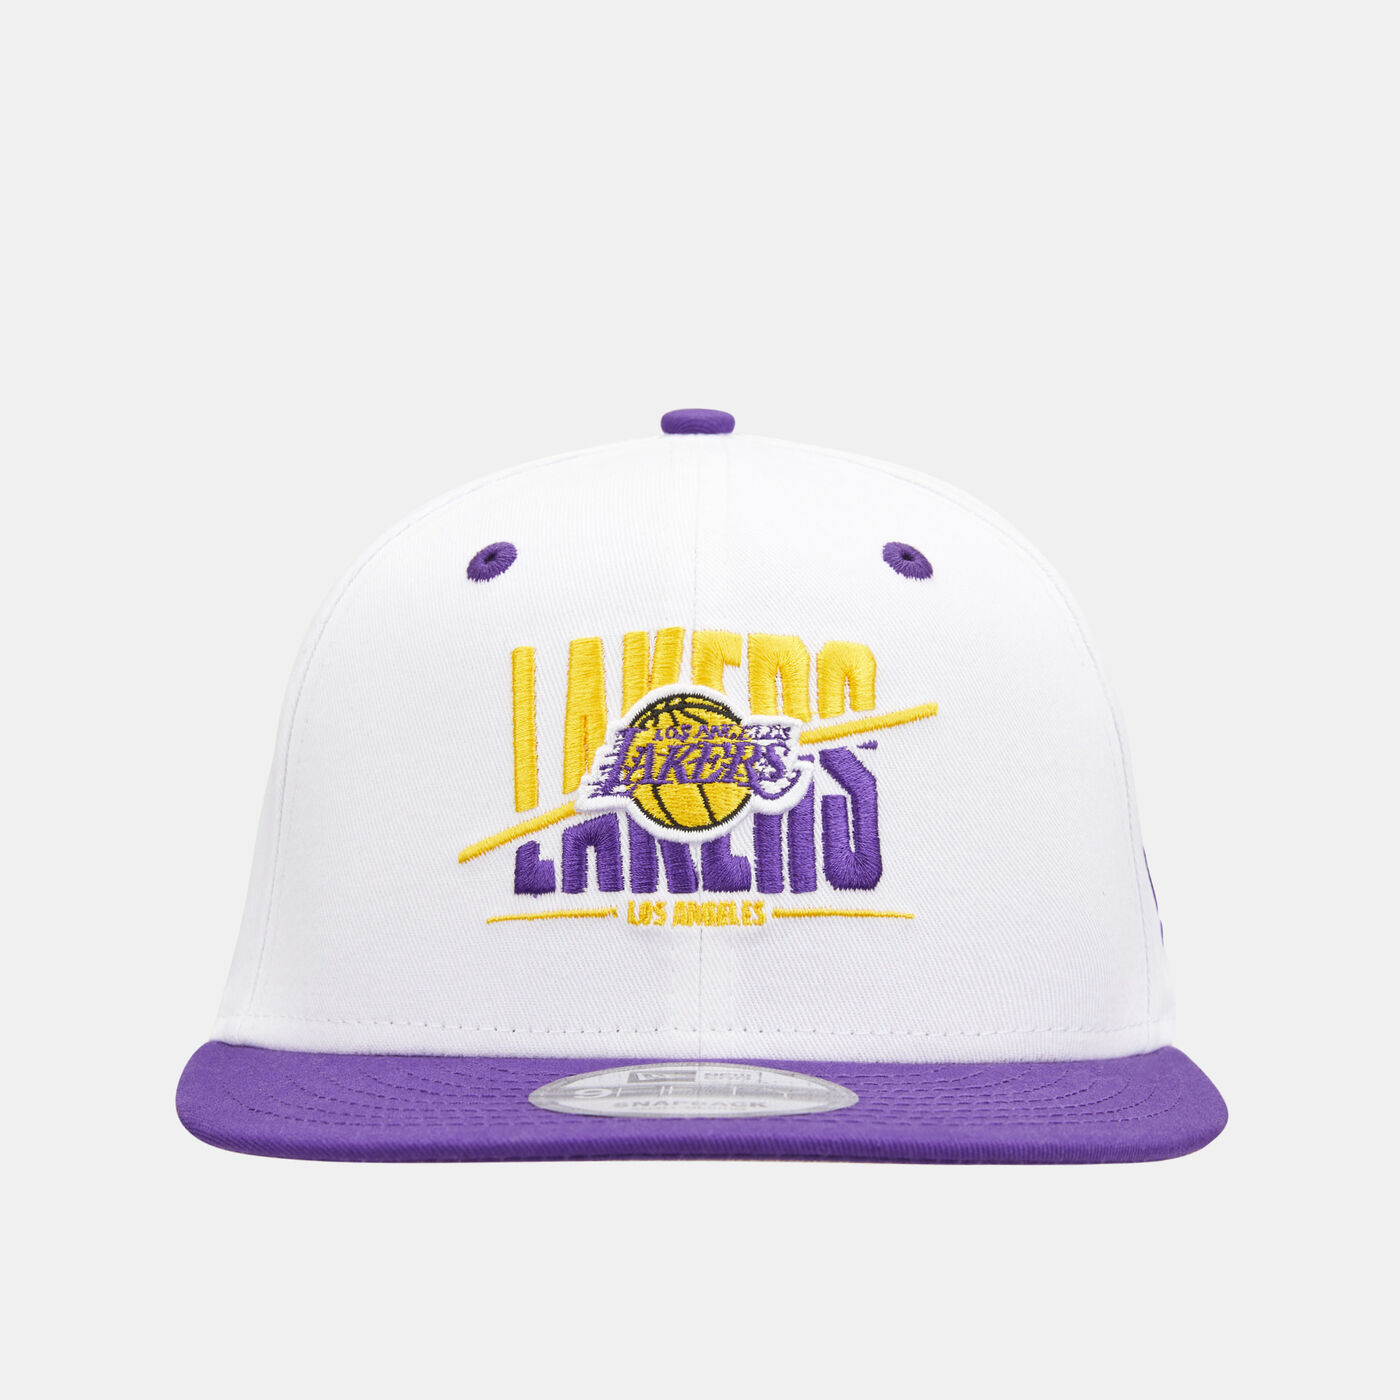 Men's NBA Los Angeles Lakers Crown 9FIFTY Cap